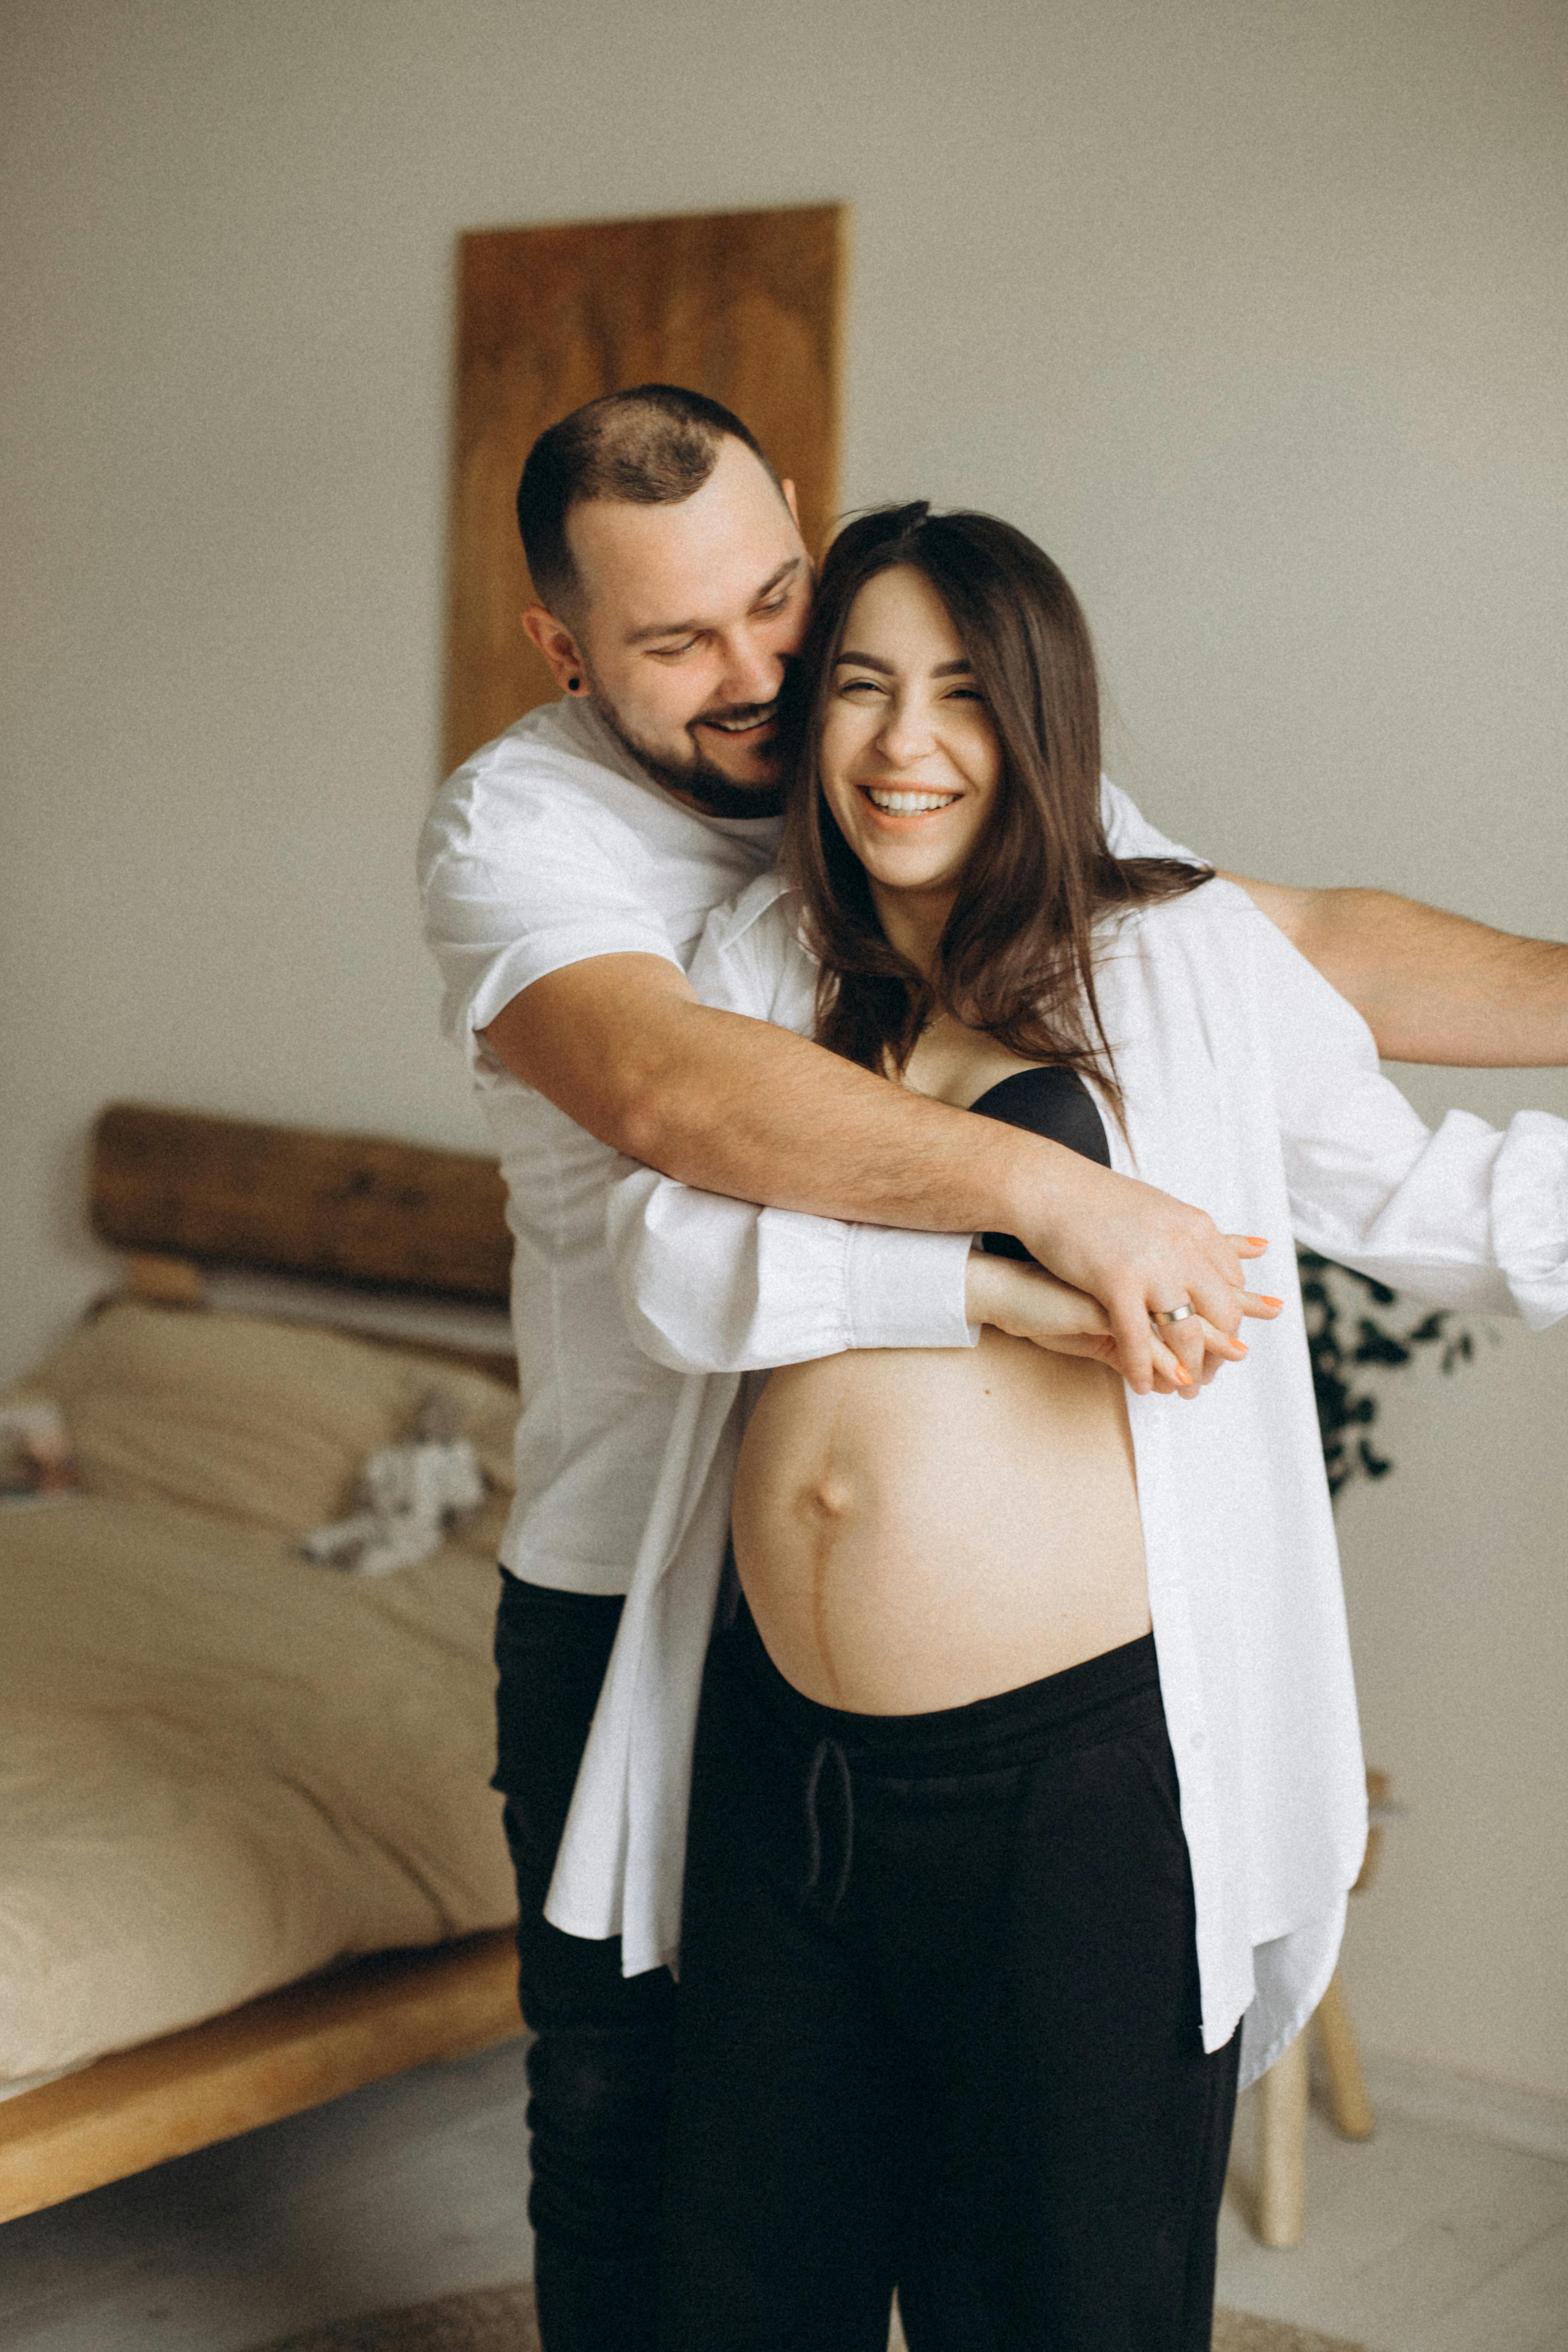 A man embracing his pregnant wife | Source: Pexels